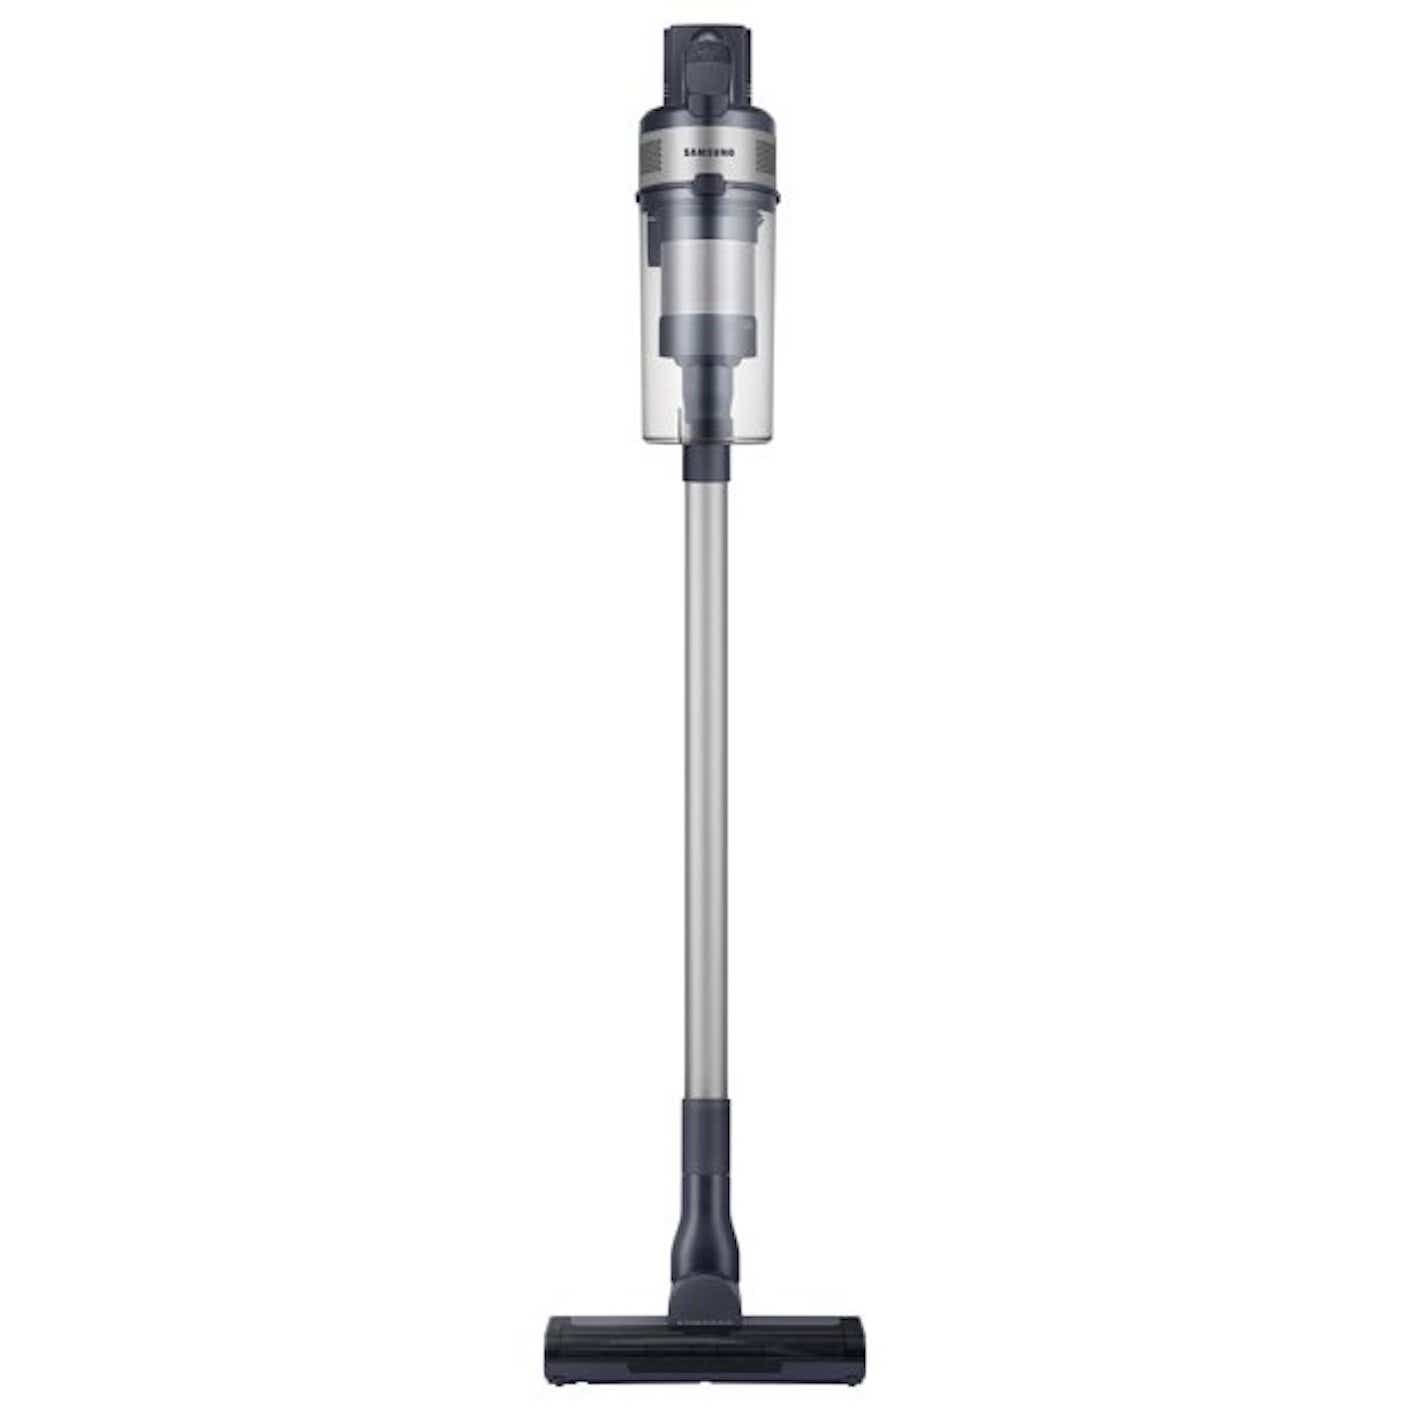 Samsung cordless stick vacuum